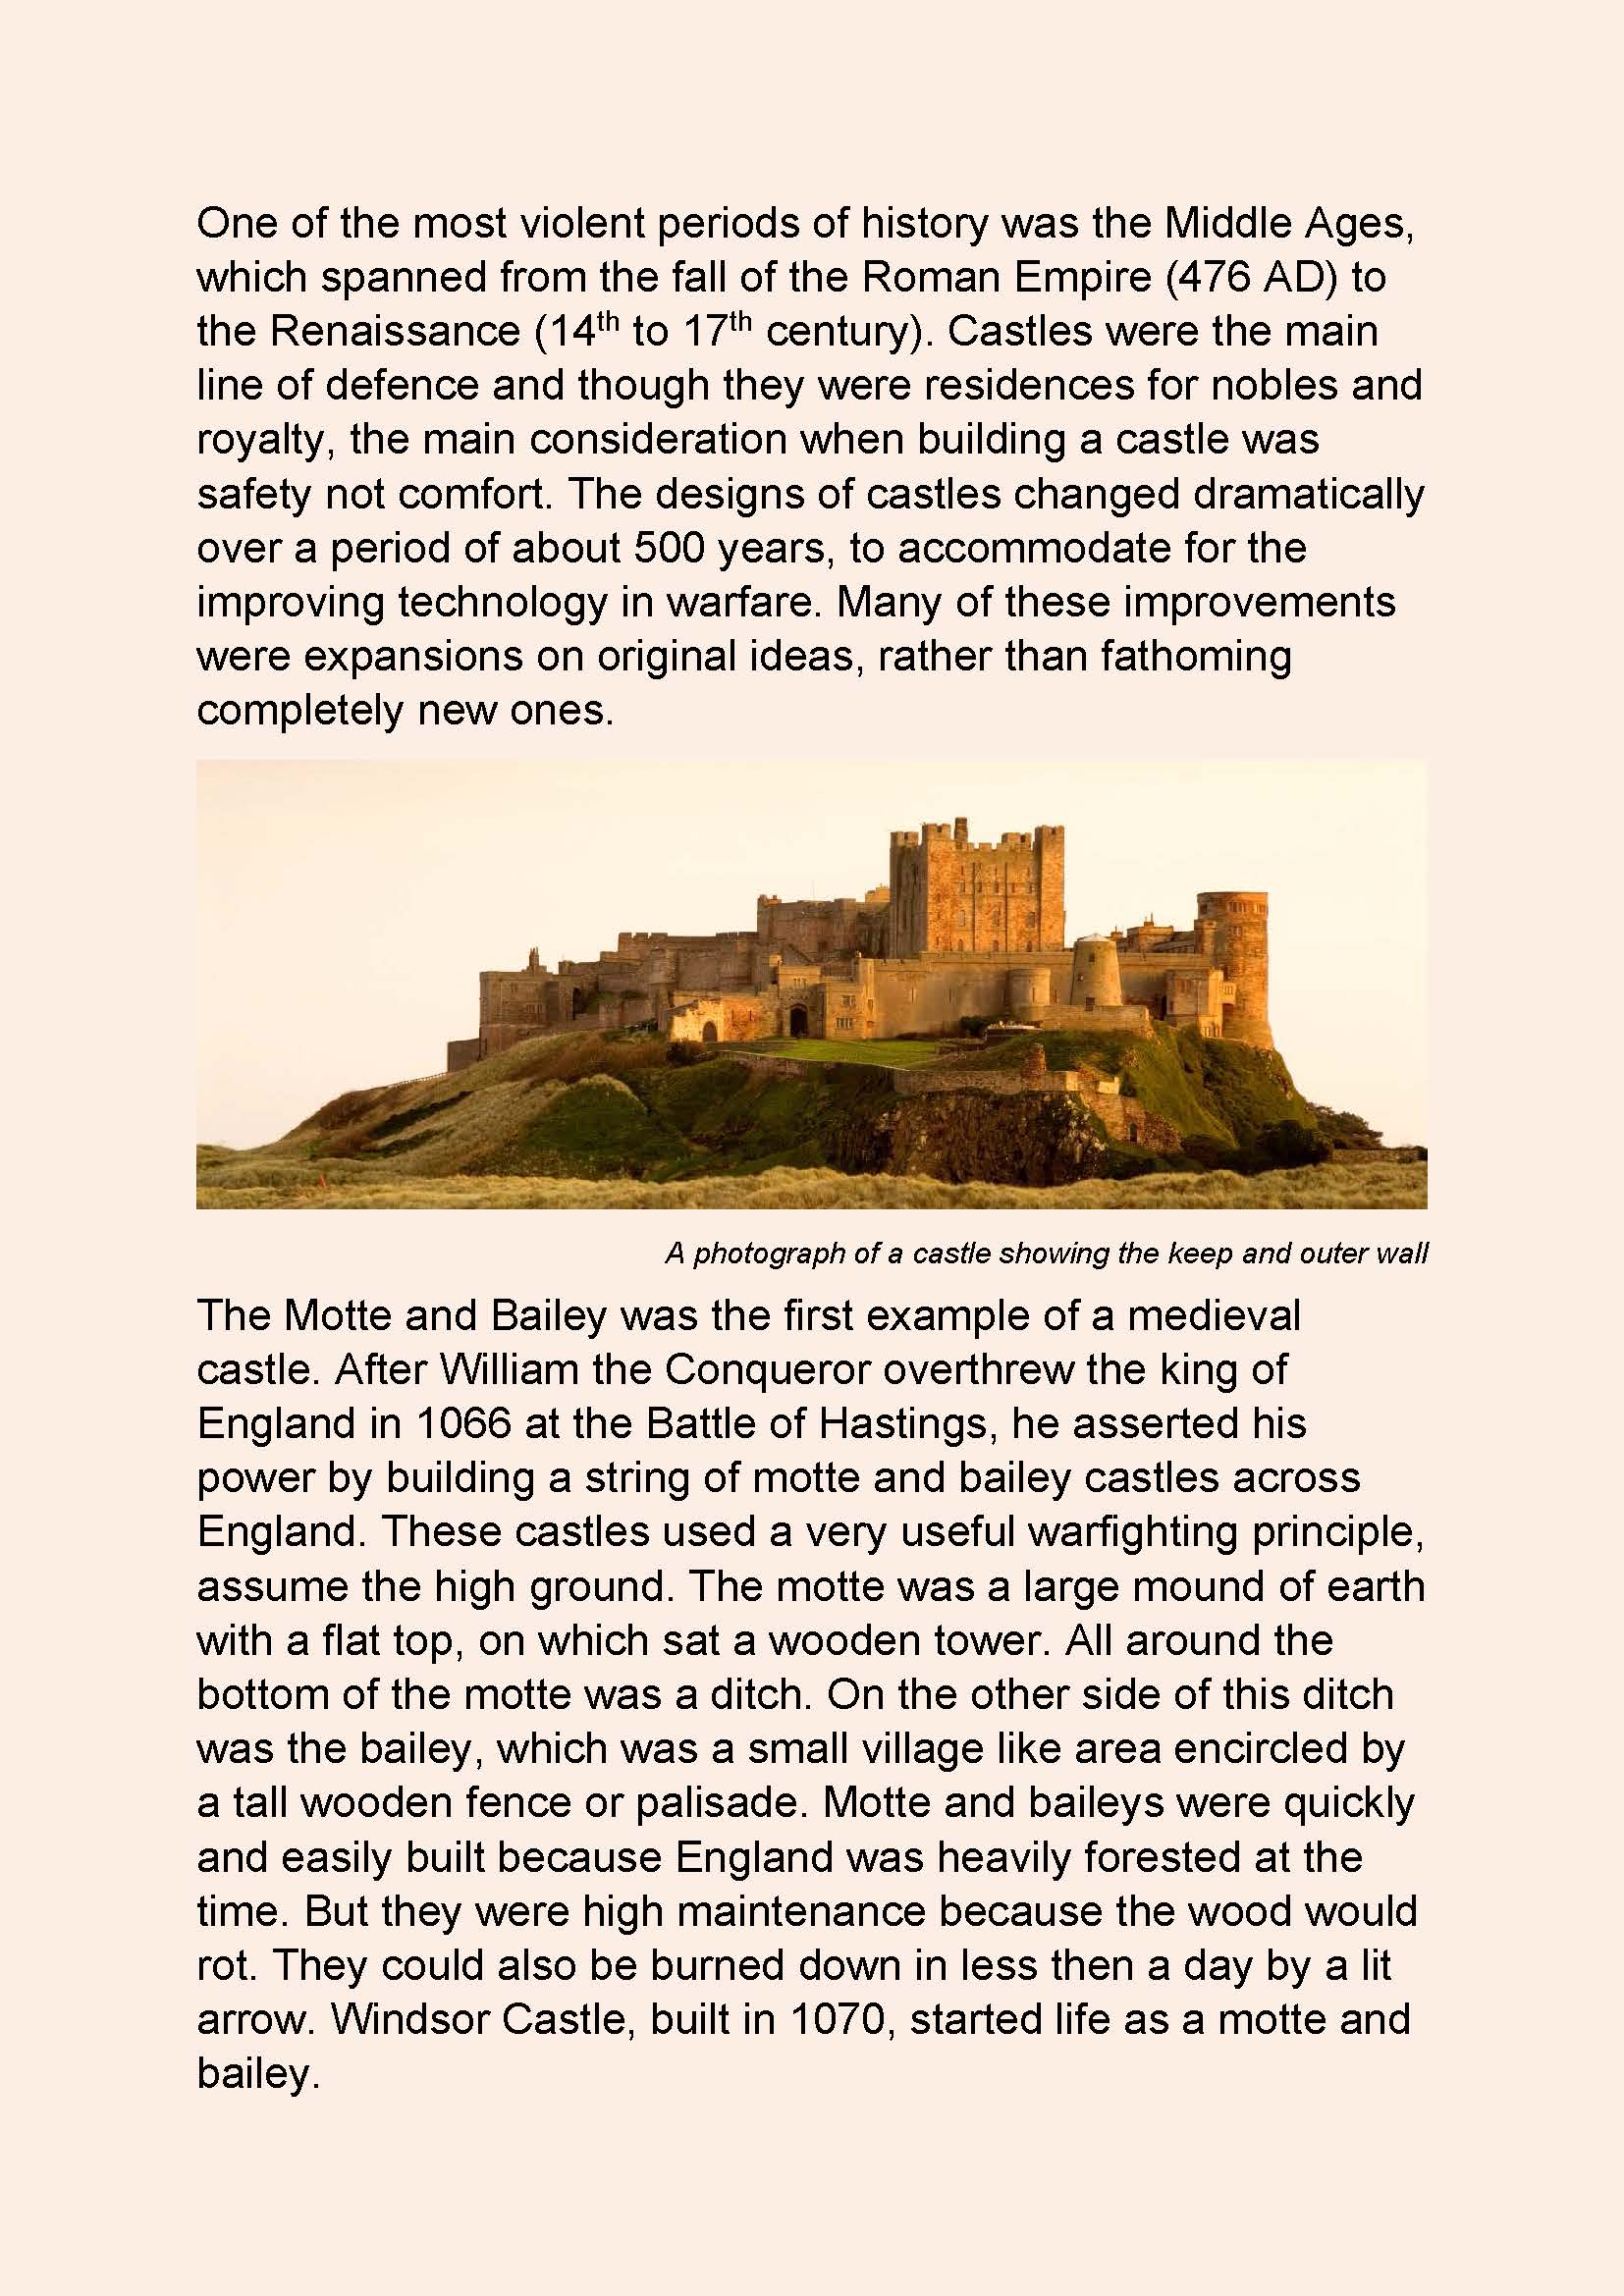 creative writing description of a castle